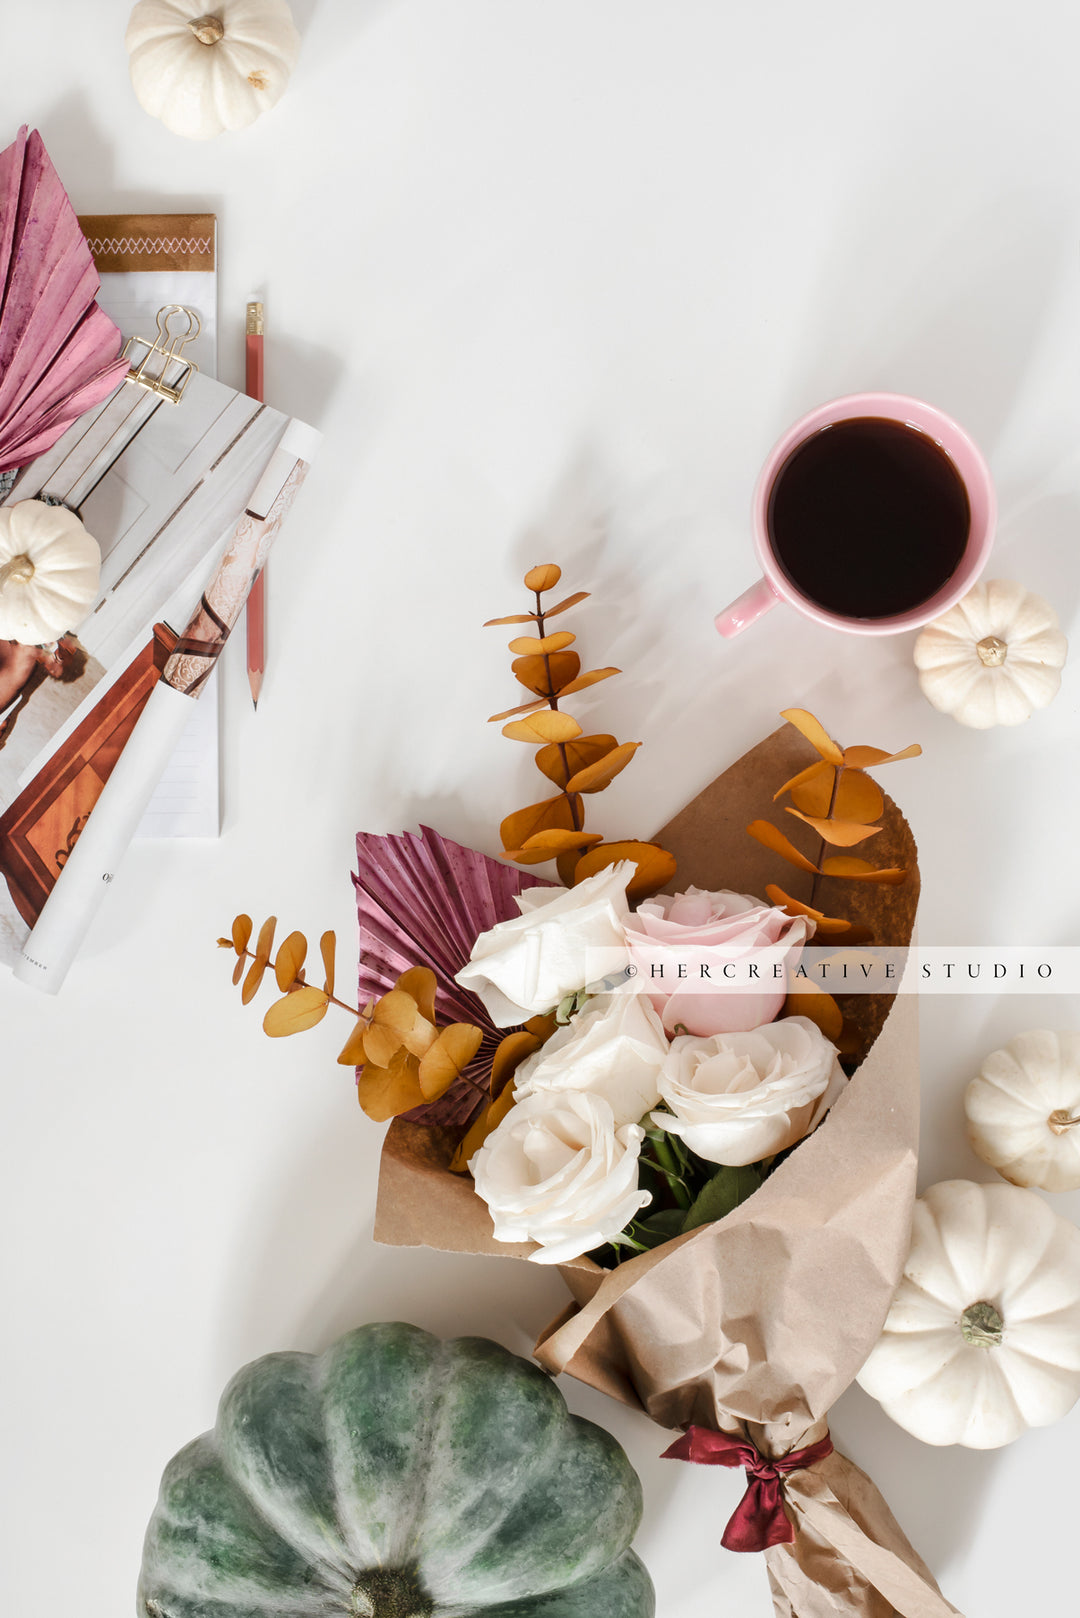 Coffee, Pumpkins & Bouquet of Fall Flowers. Digital Stock Image.